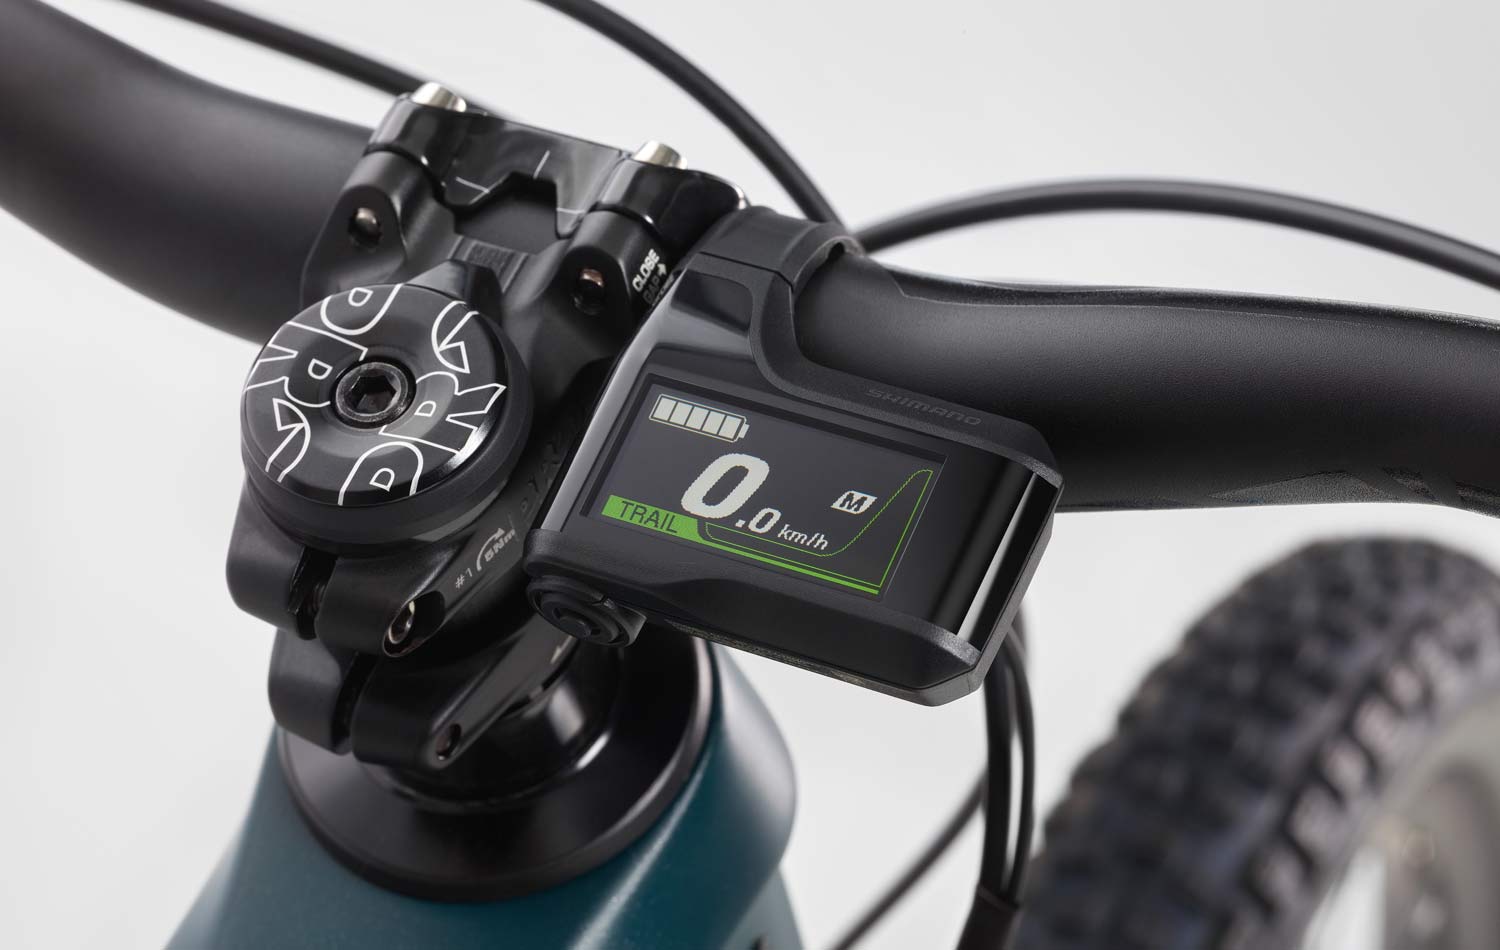 Shimano EP8 e-MTB system, lighter stronger upgraded e-bike eMTB powertrain system, new display